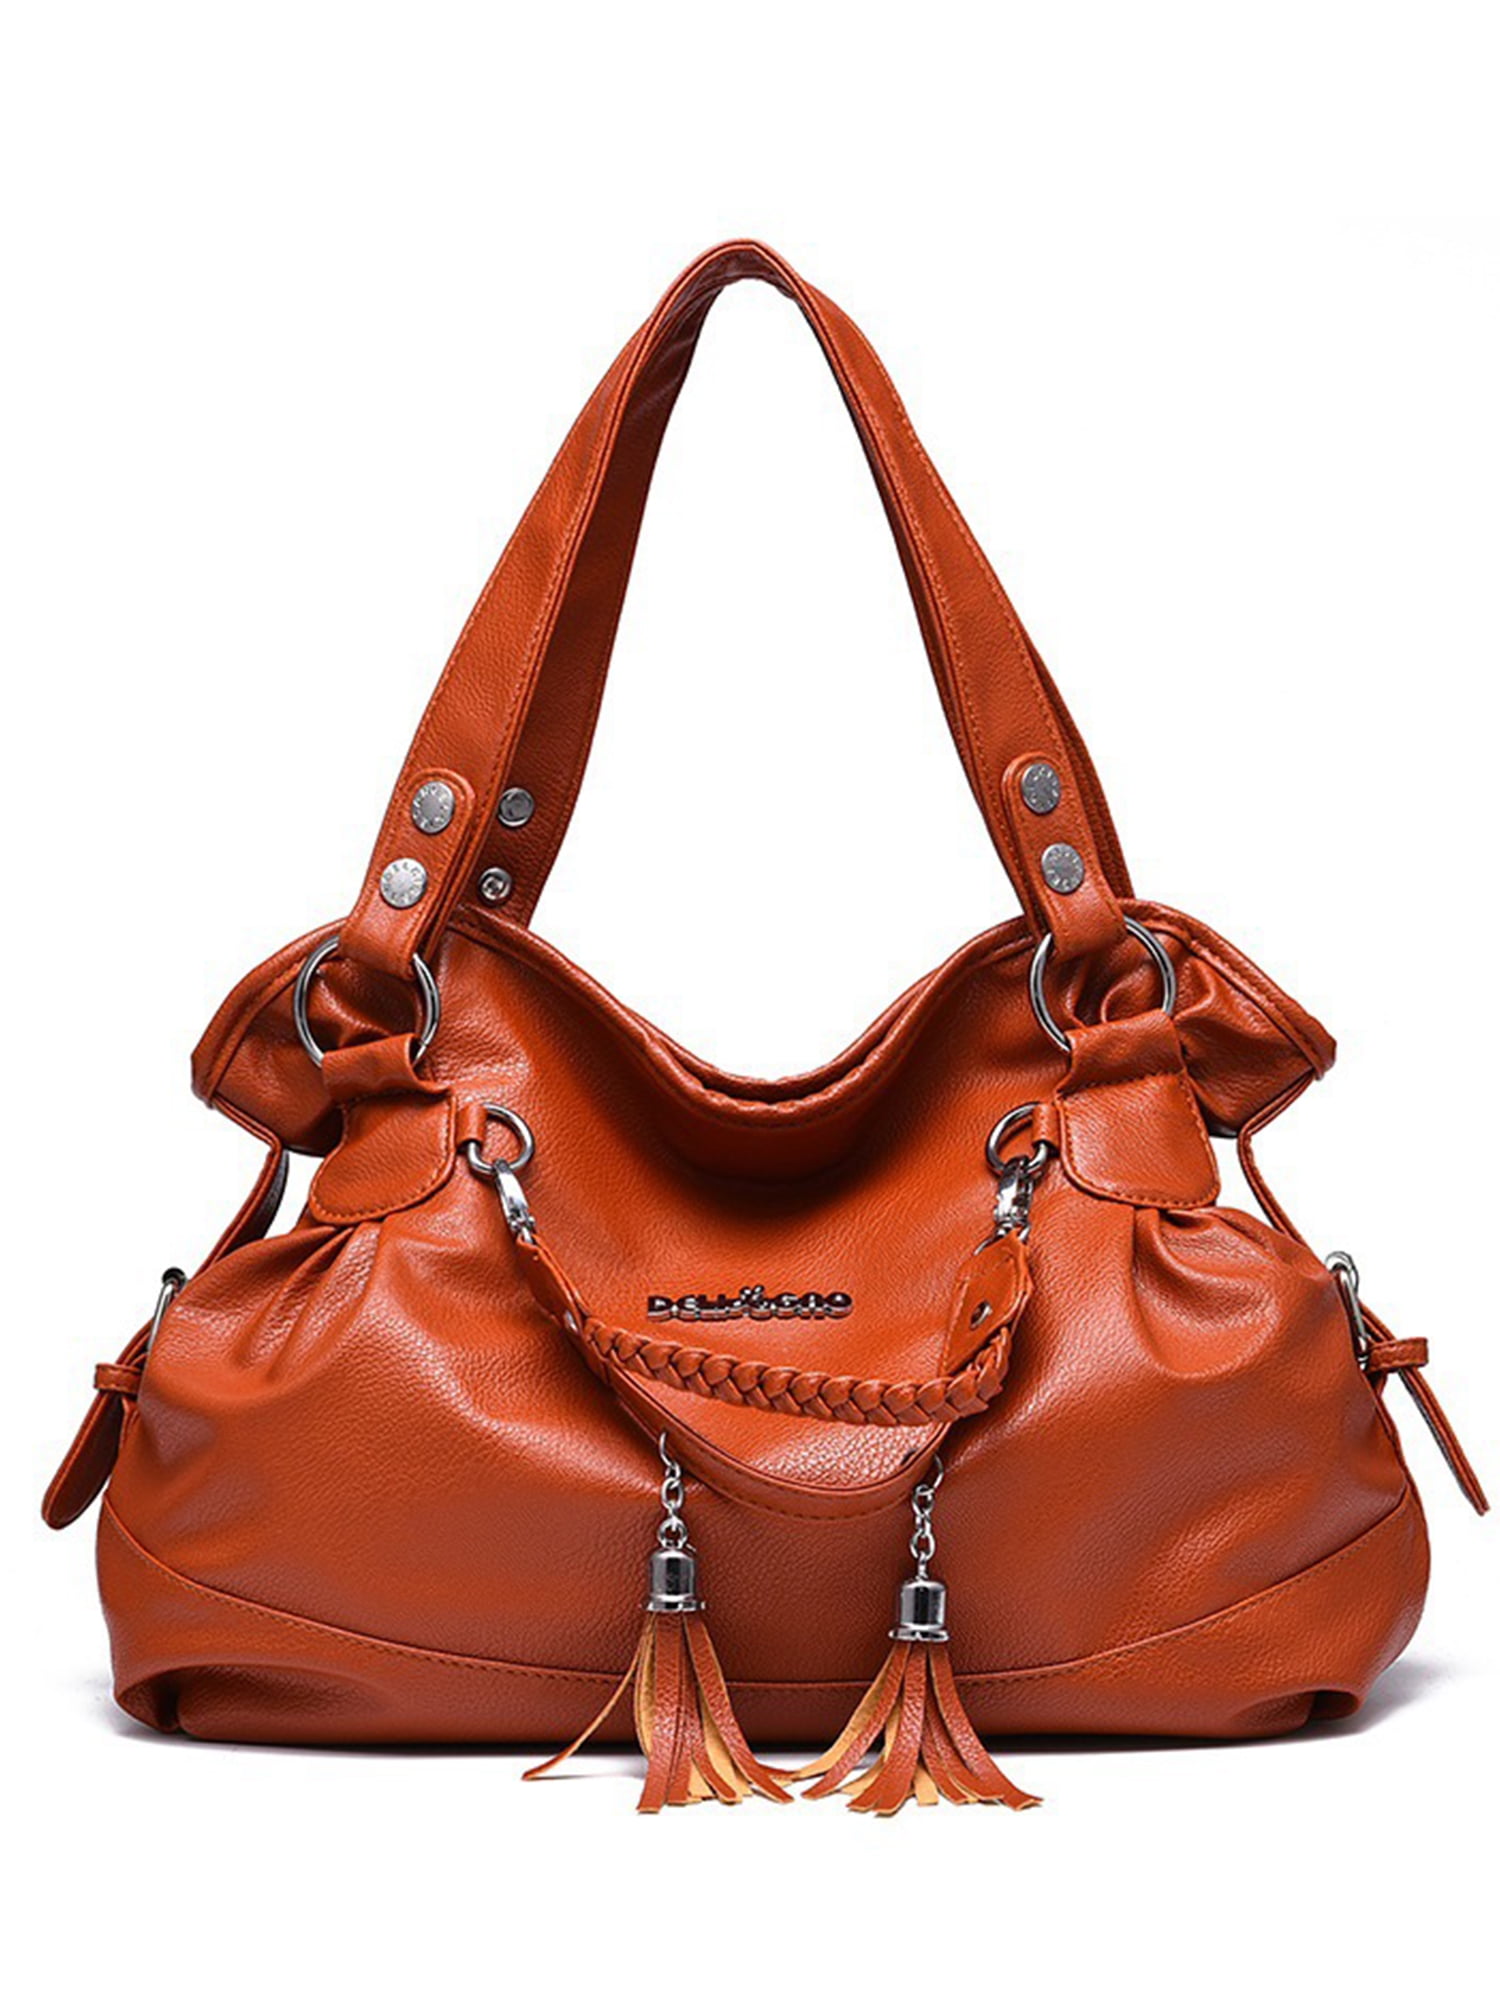 Buy LaFille Brand Women's Latest Premium Design Handbag (Black) at Amazon.in